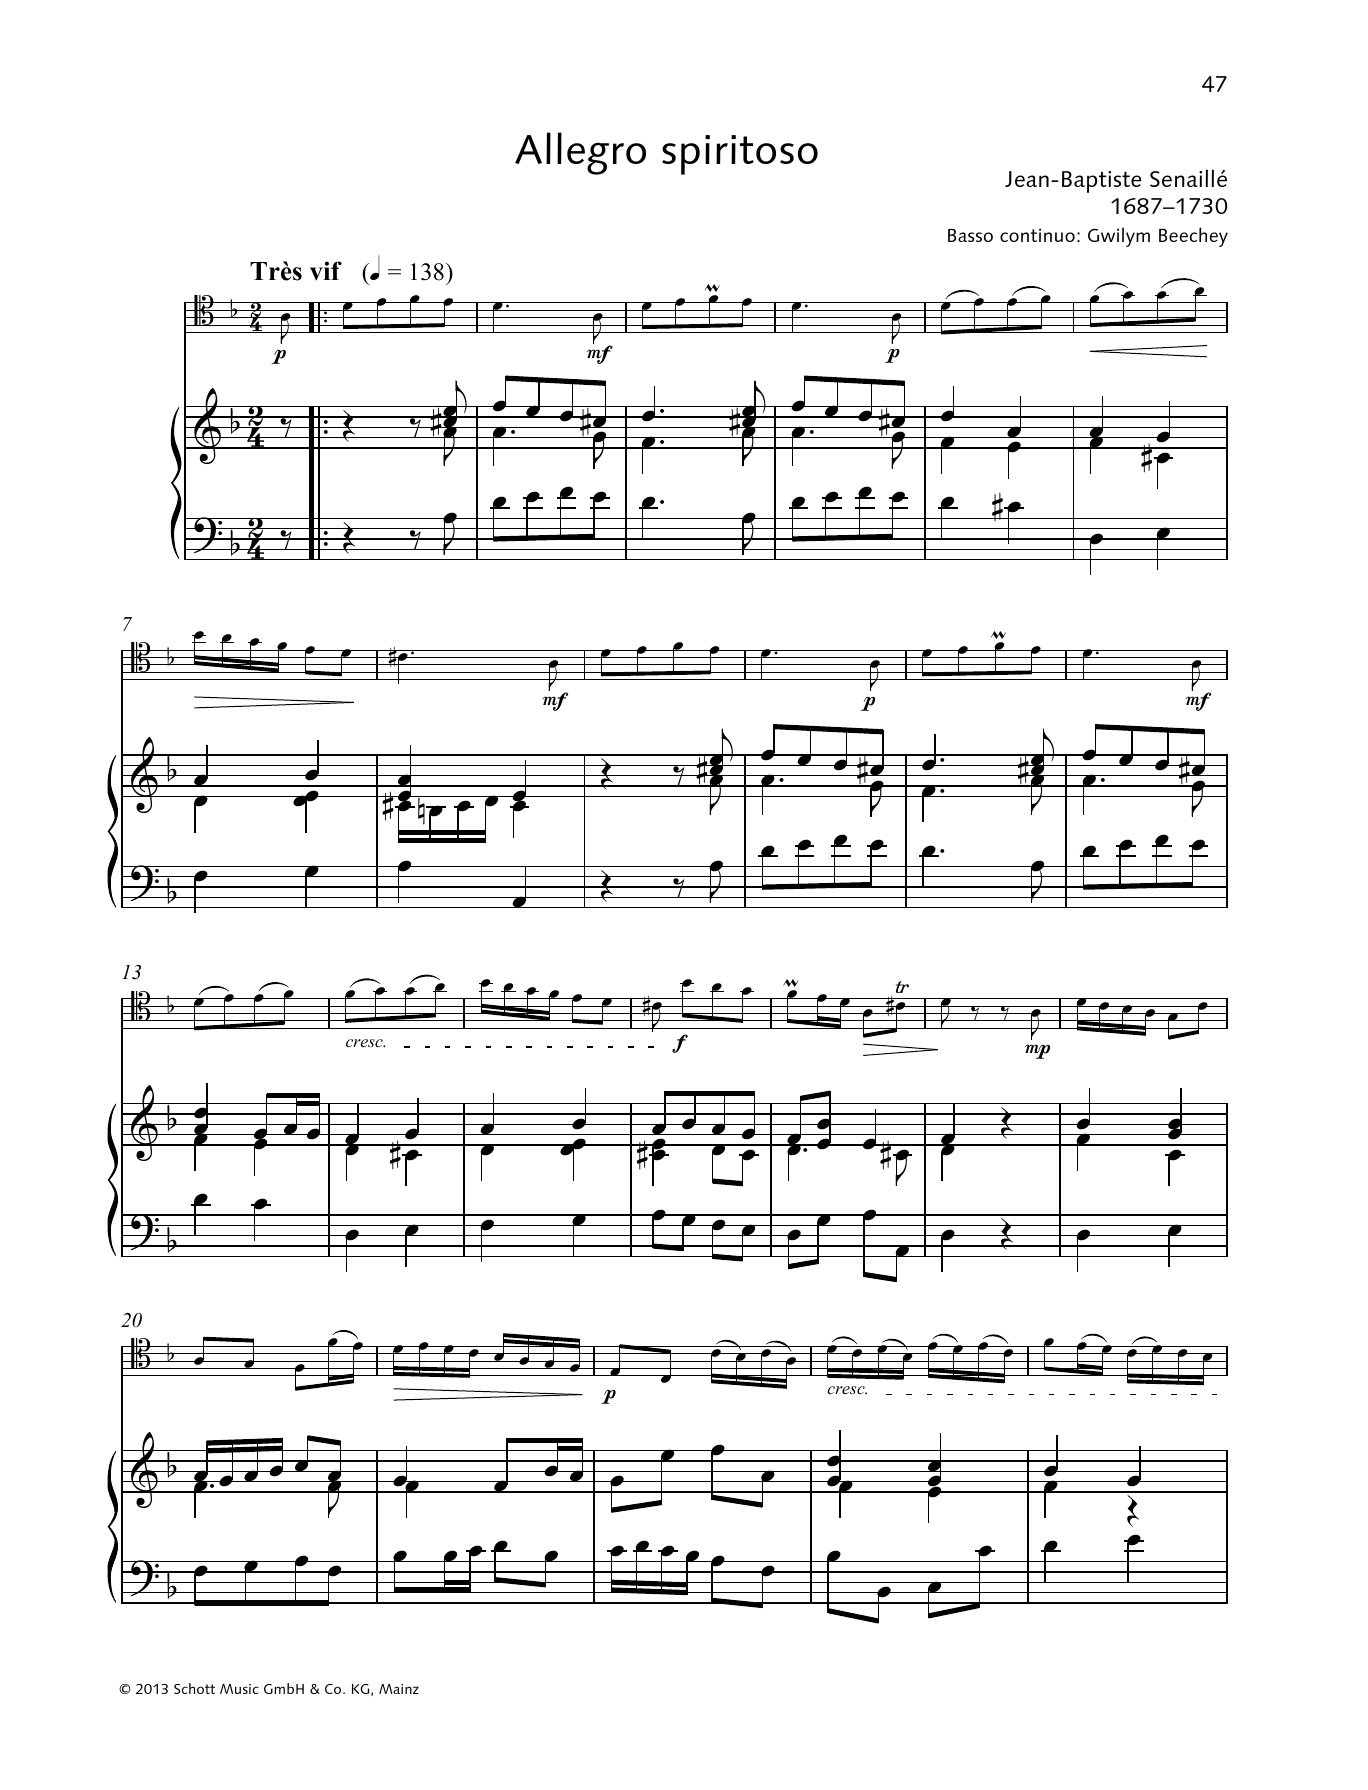 Jean-Baptiste Senaille Allegro Spiritoso Sheet Music Notes & Chords for String Solo - Download or Print PDF